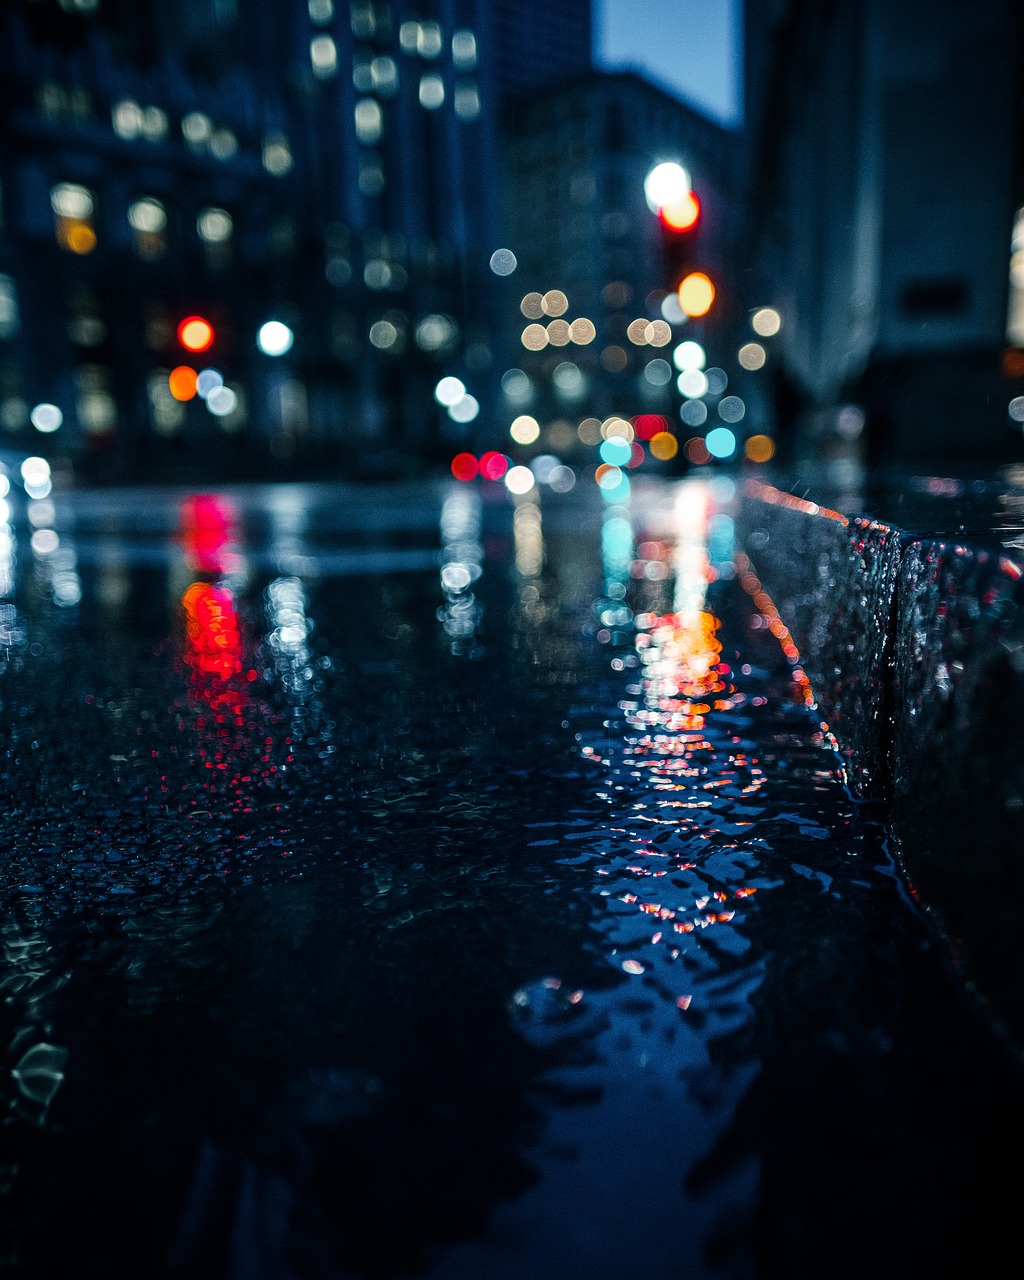 Capturing Rain: Tips for Creative Rain Photography